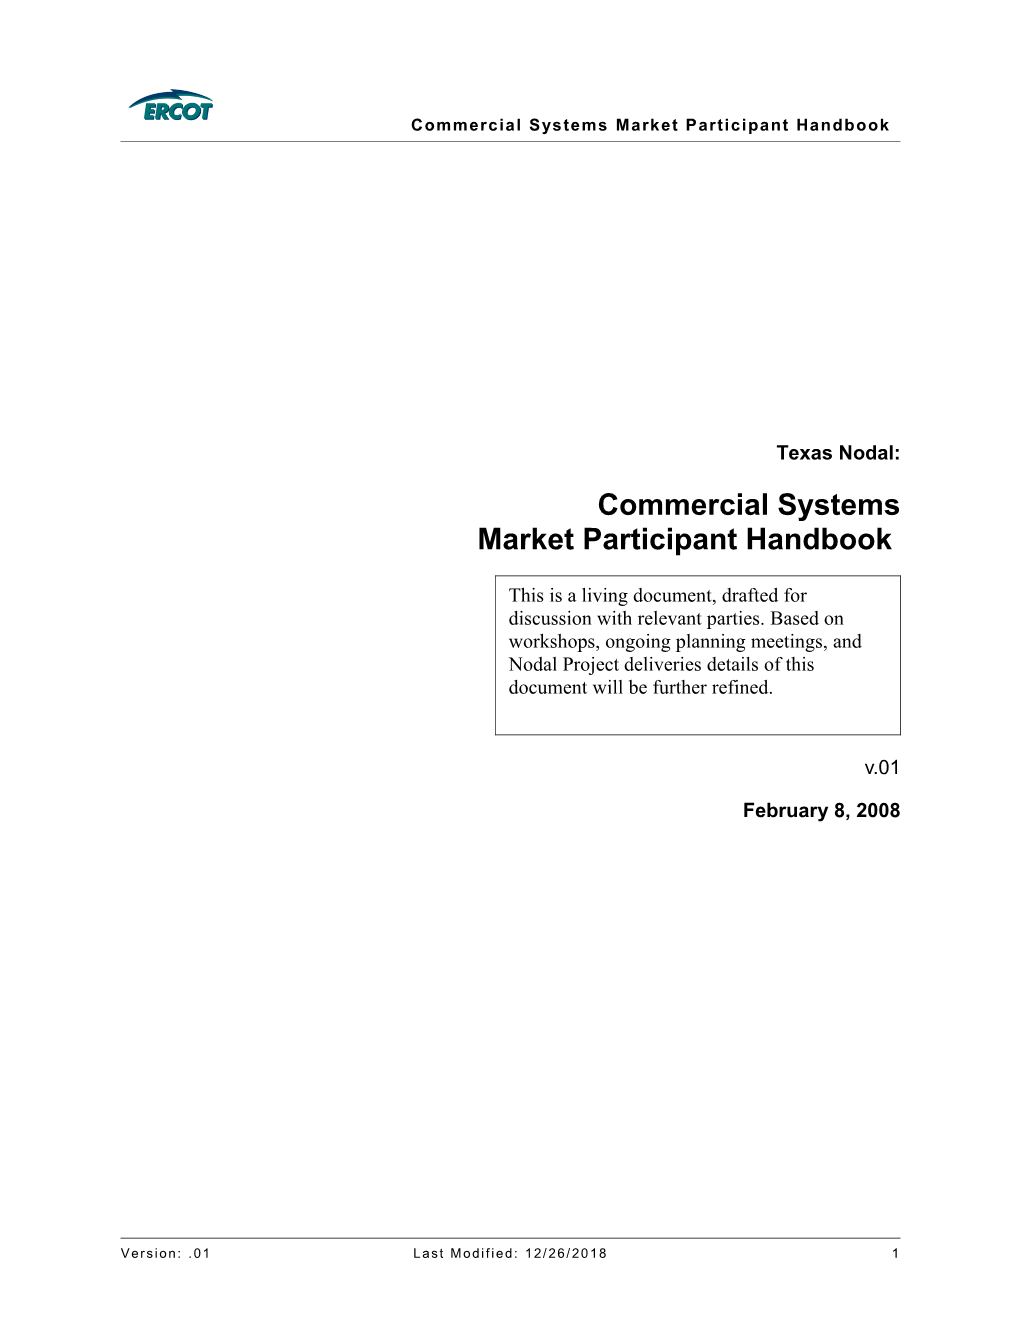 Release 8 Market Participant Handbook